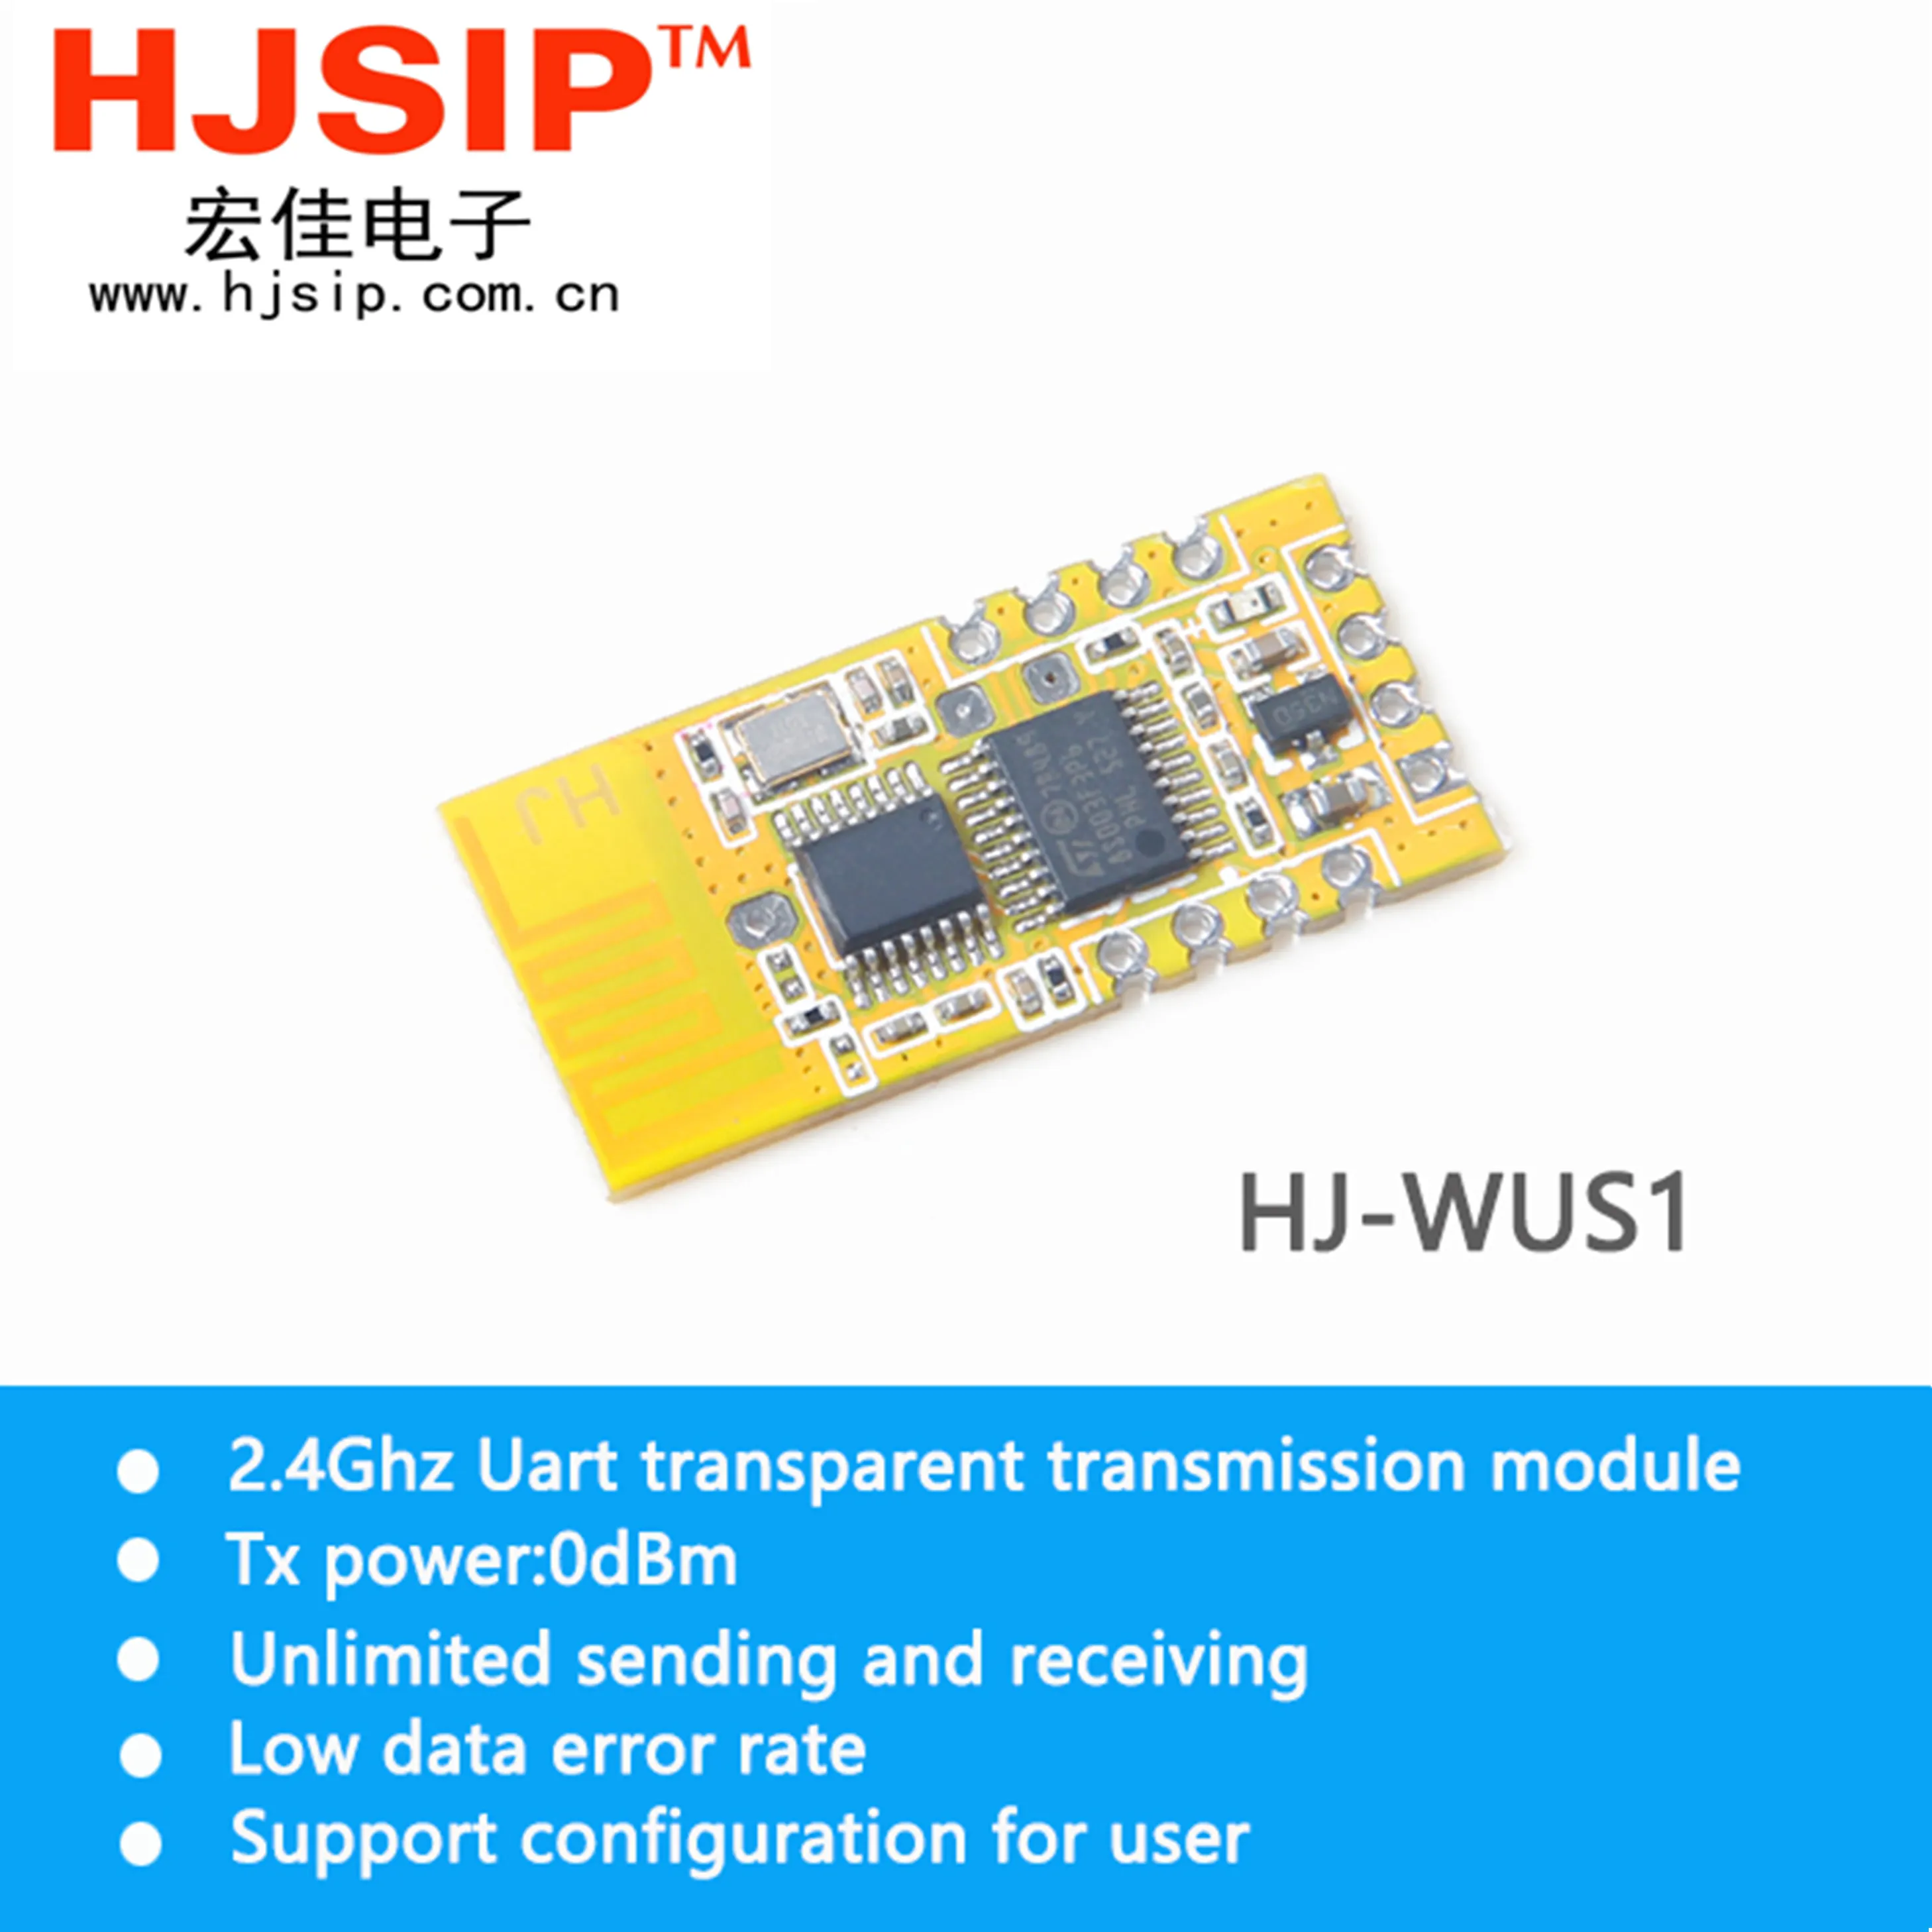 HJ-WUS1 data transmission module